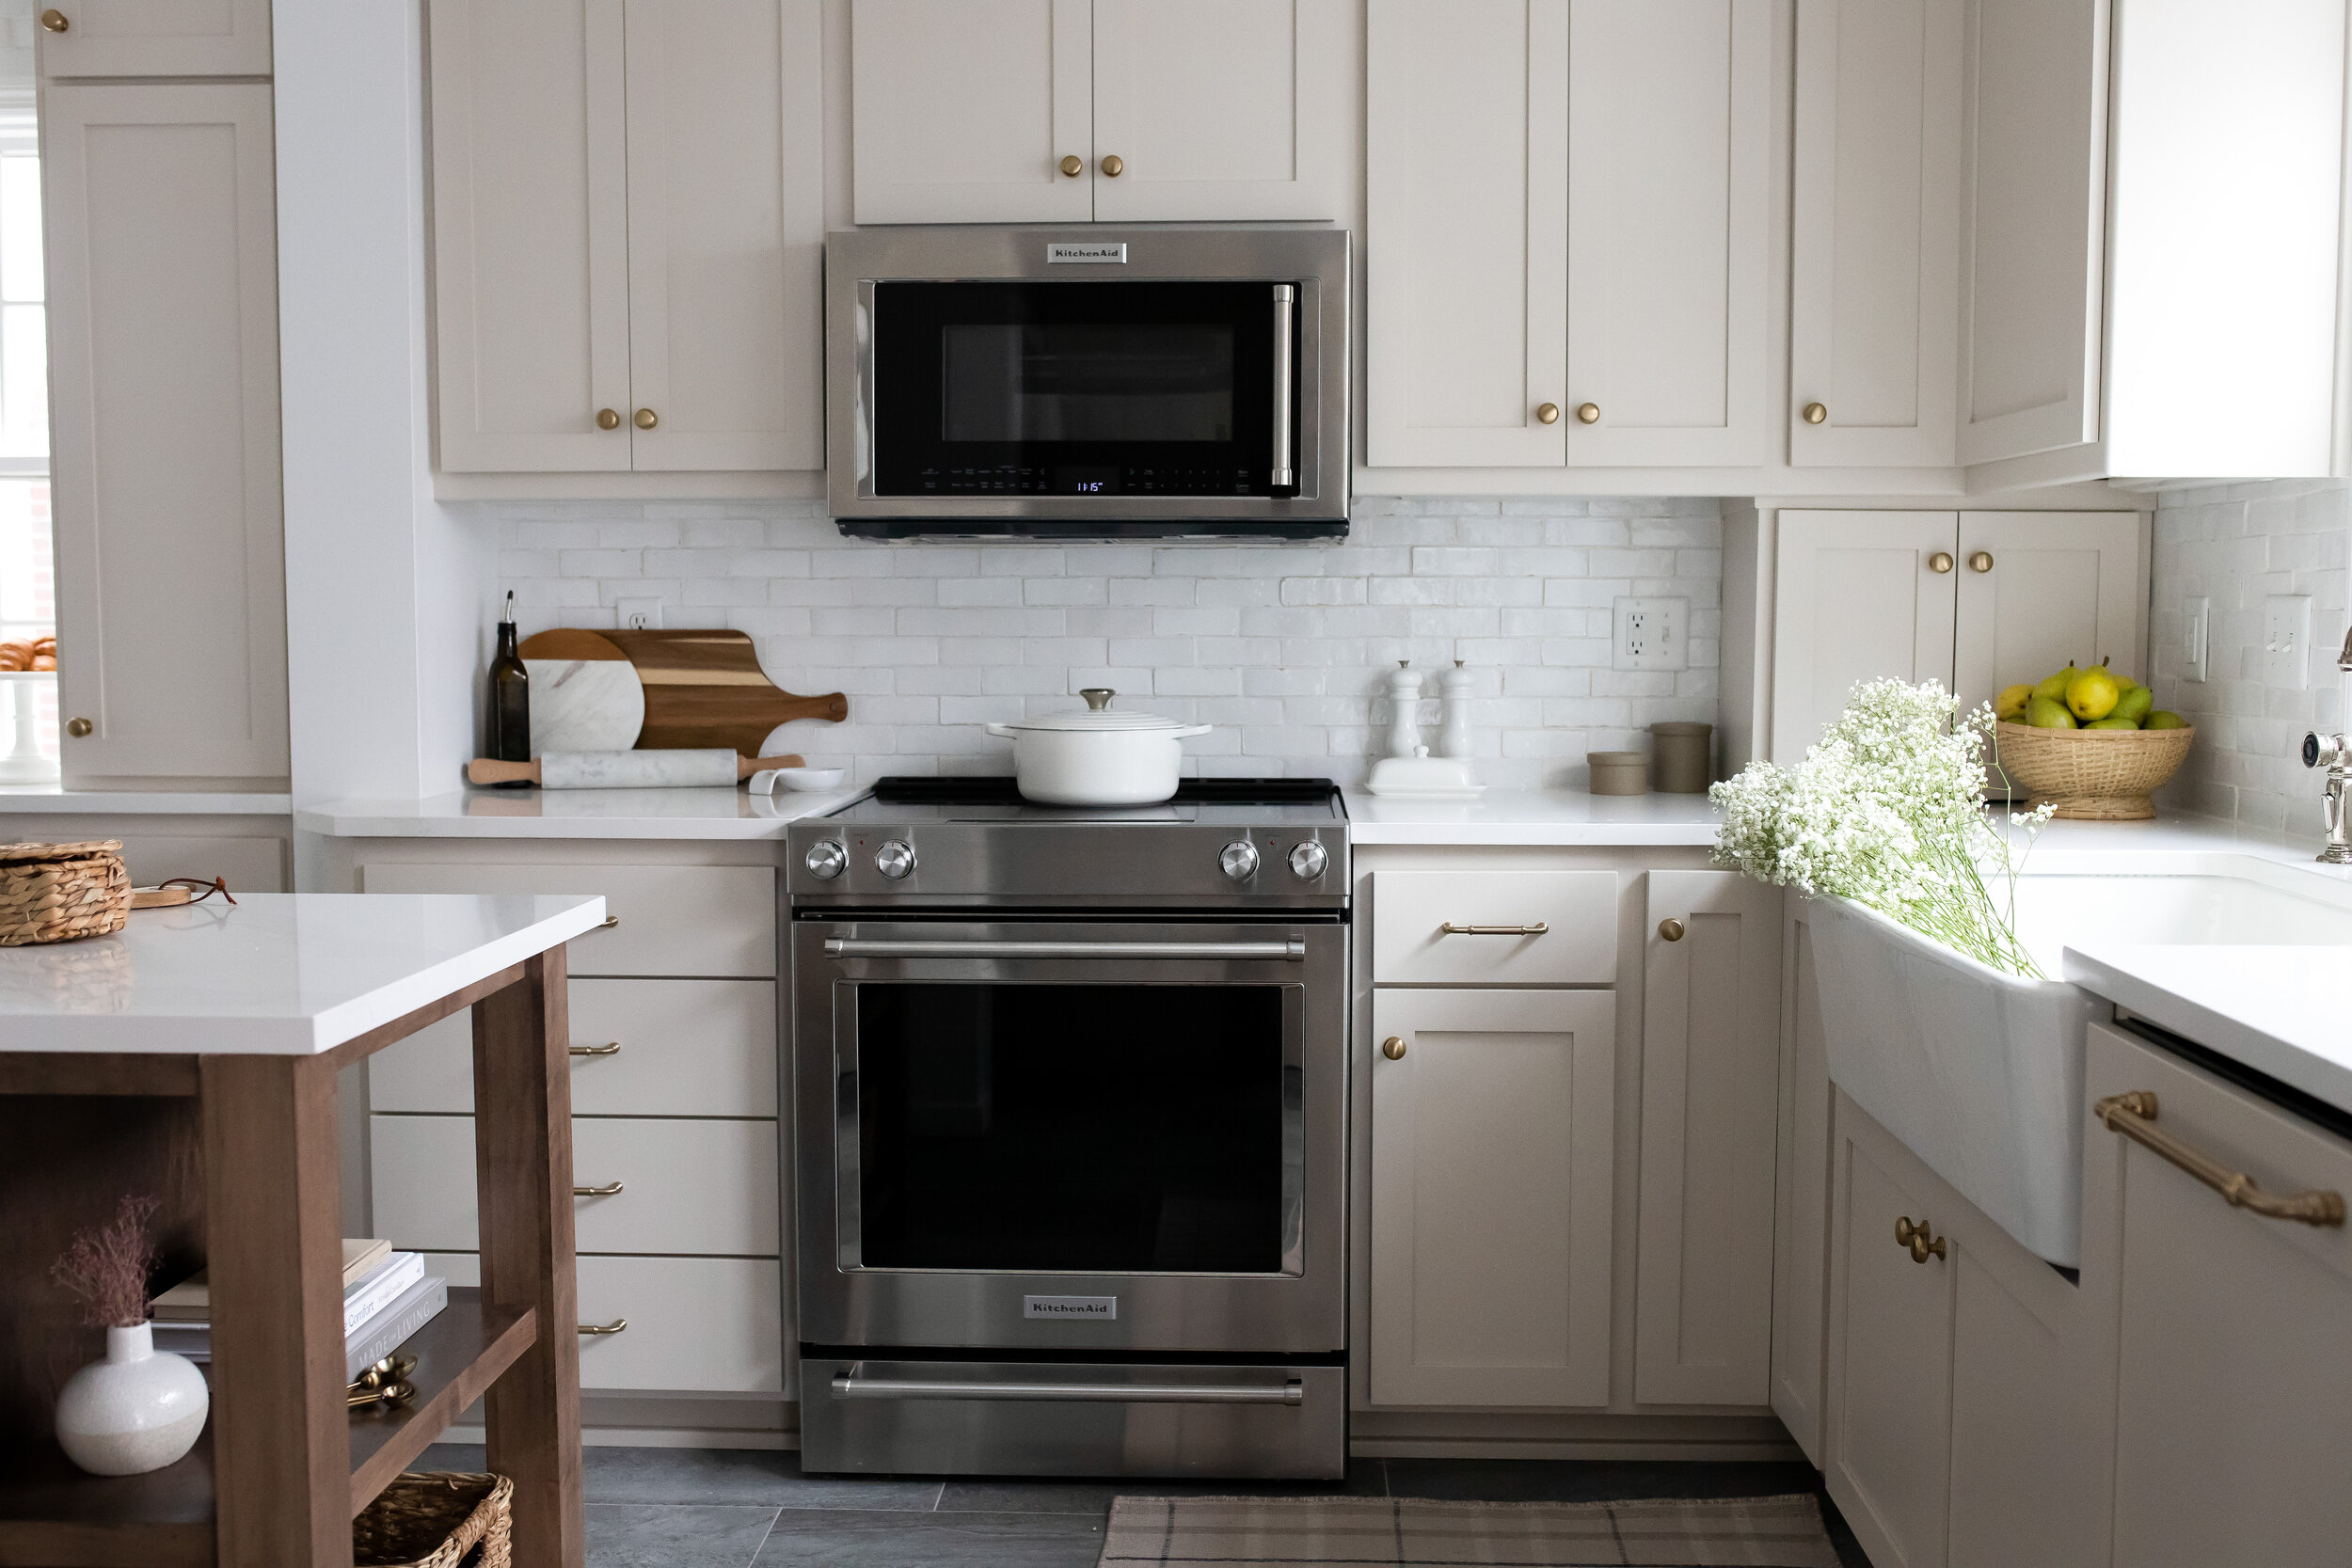 Timeless White Kitchen Designs We Love - Residential Interior